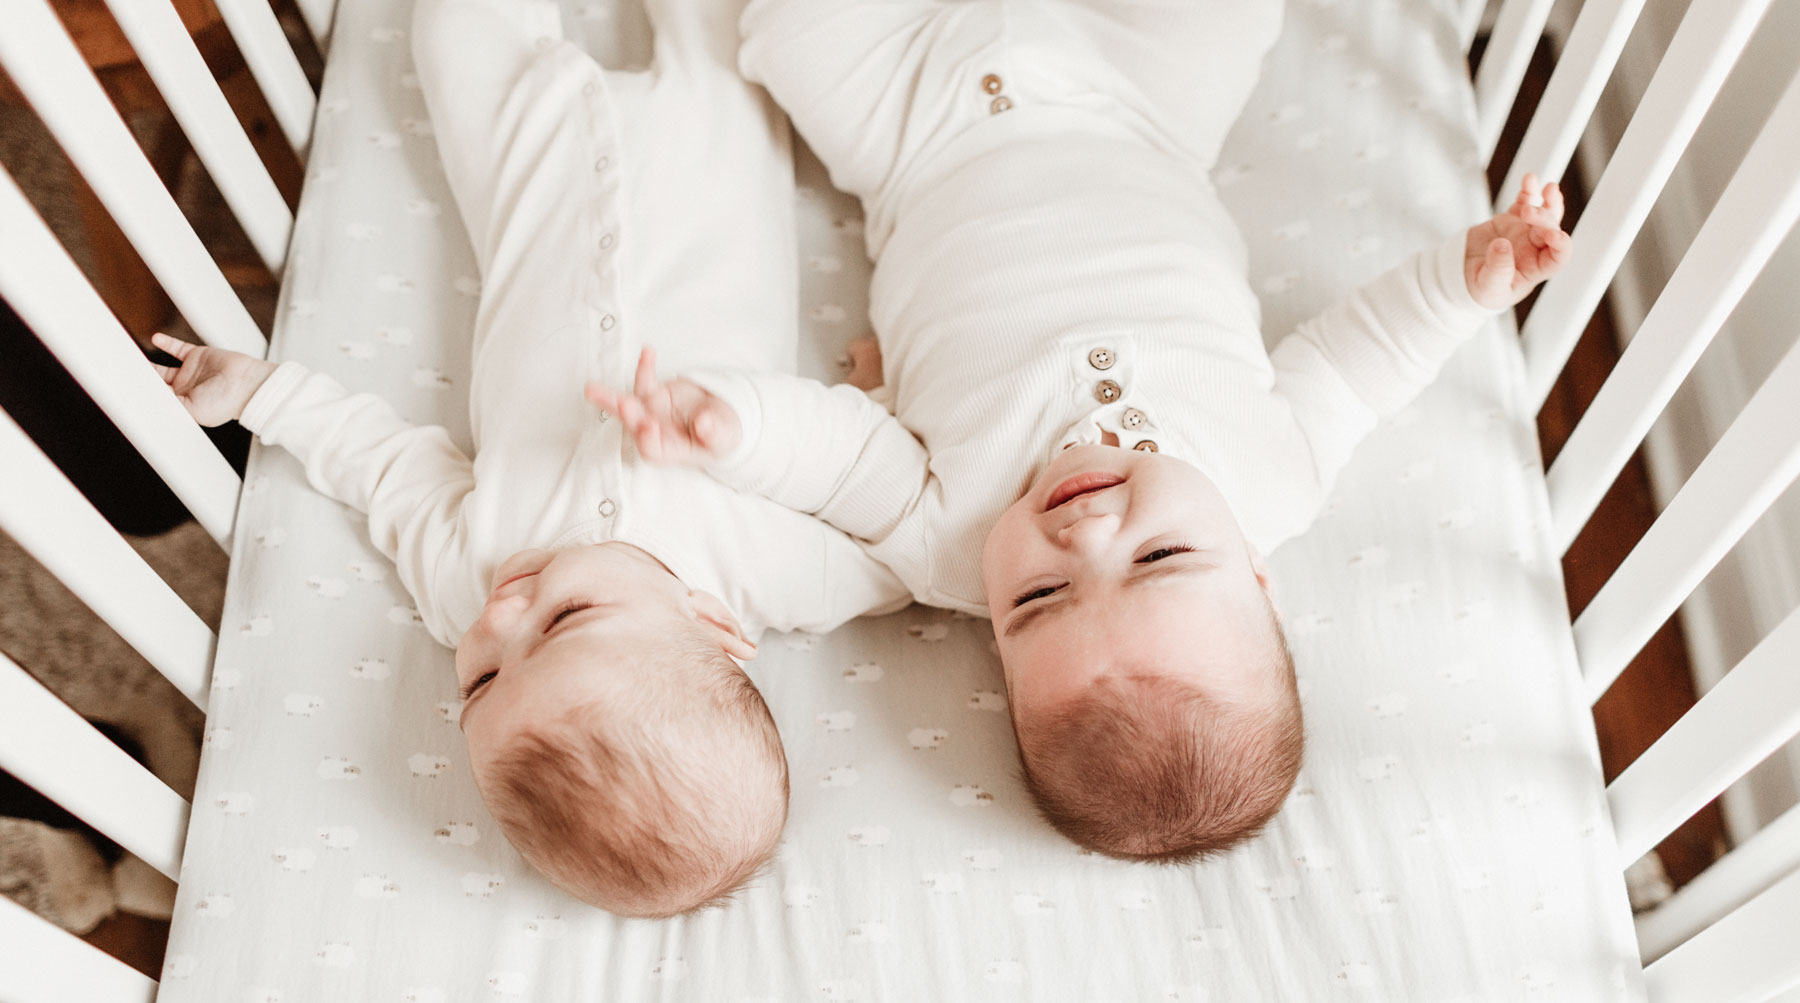 infant sleep and feeding routines